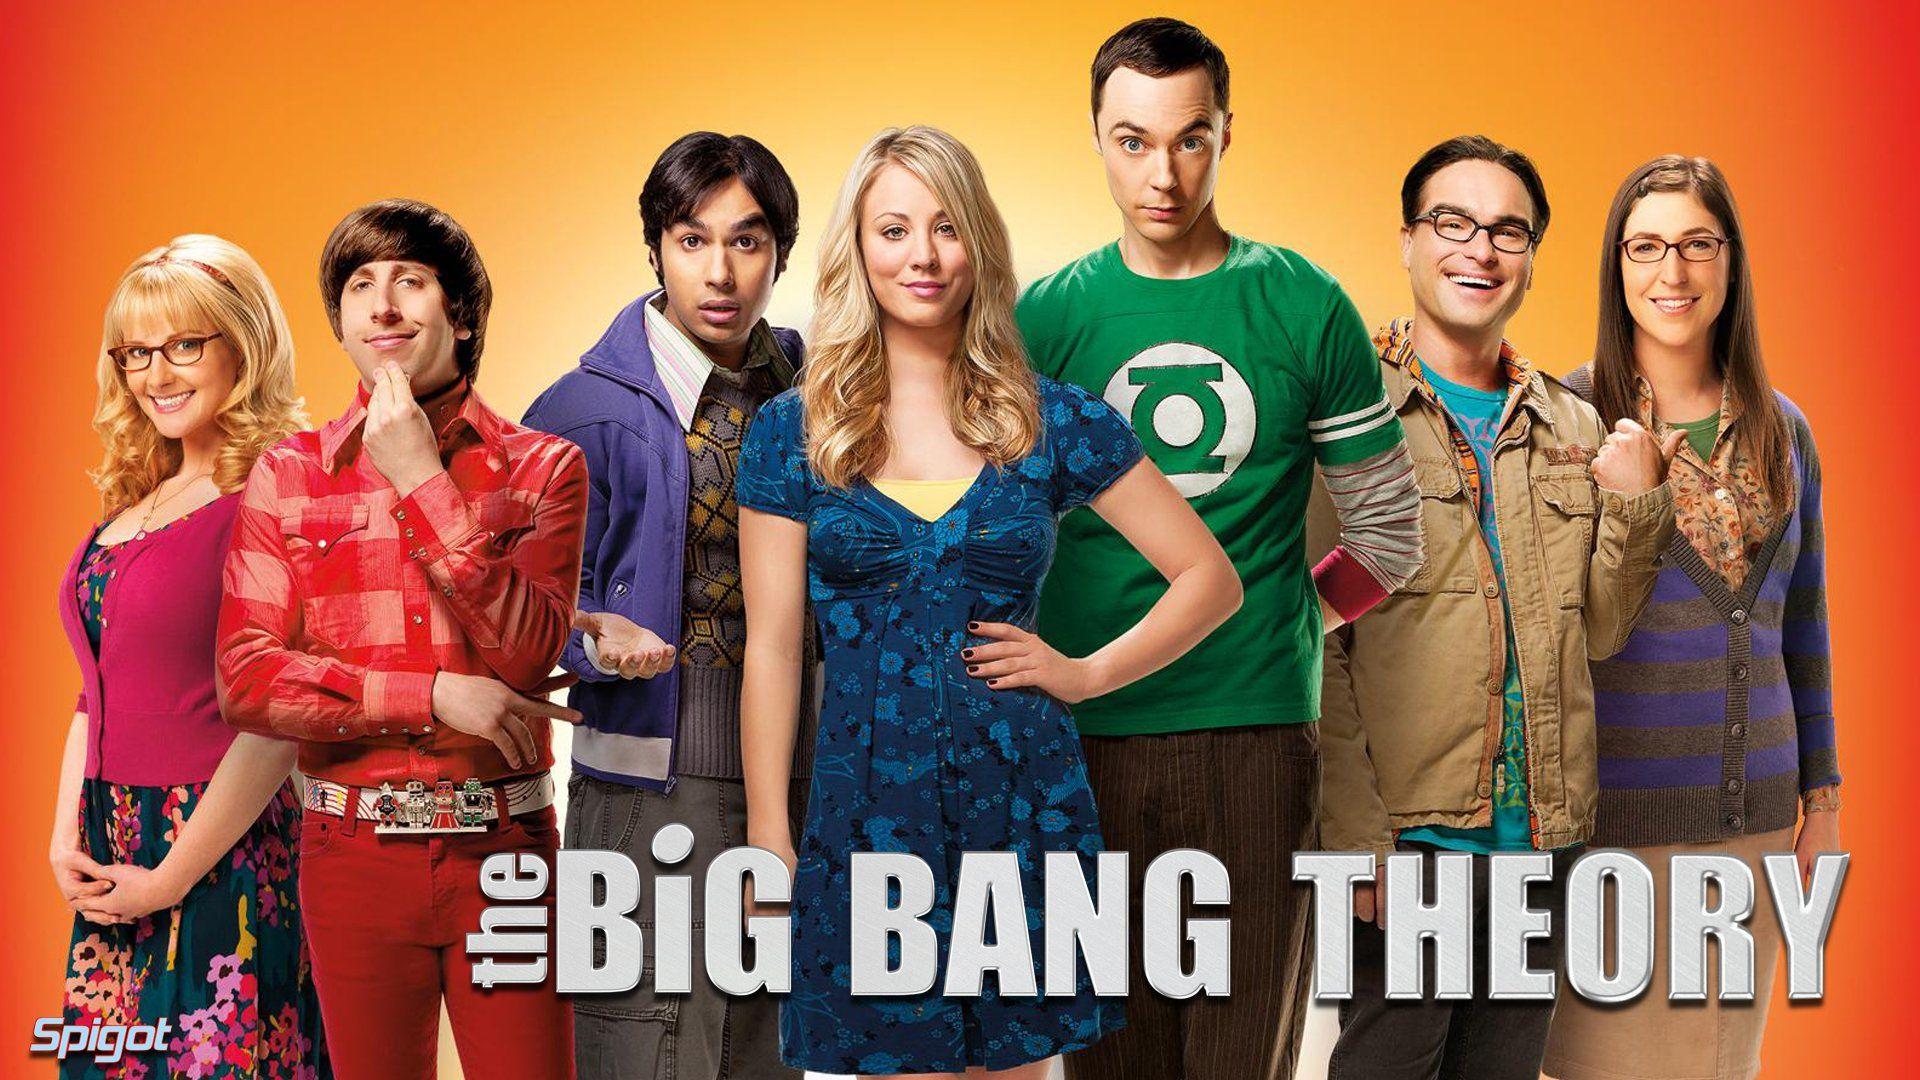 The Big Bang Theory HD Wallpaper and Background Image